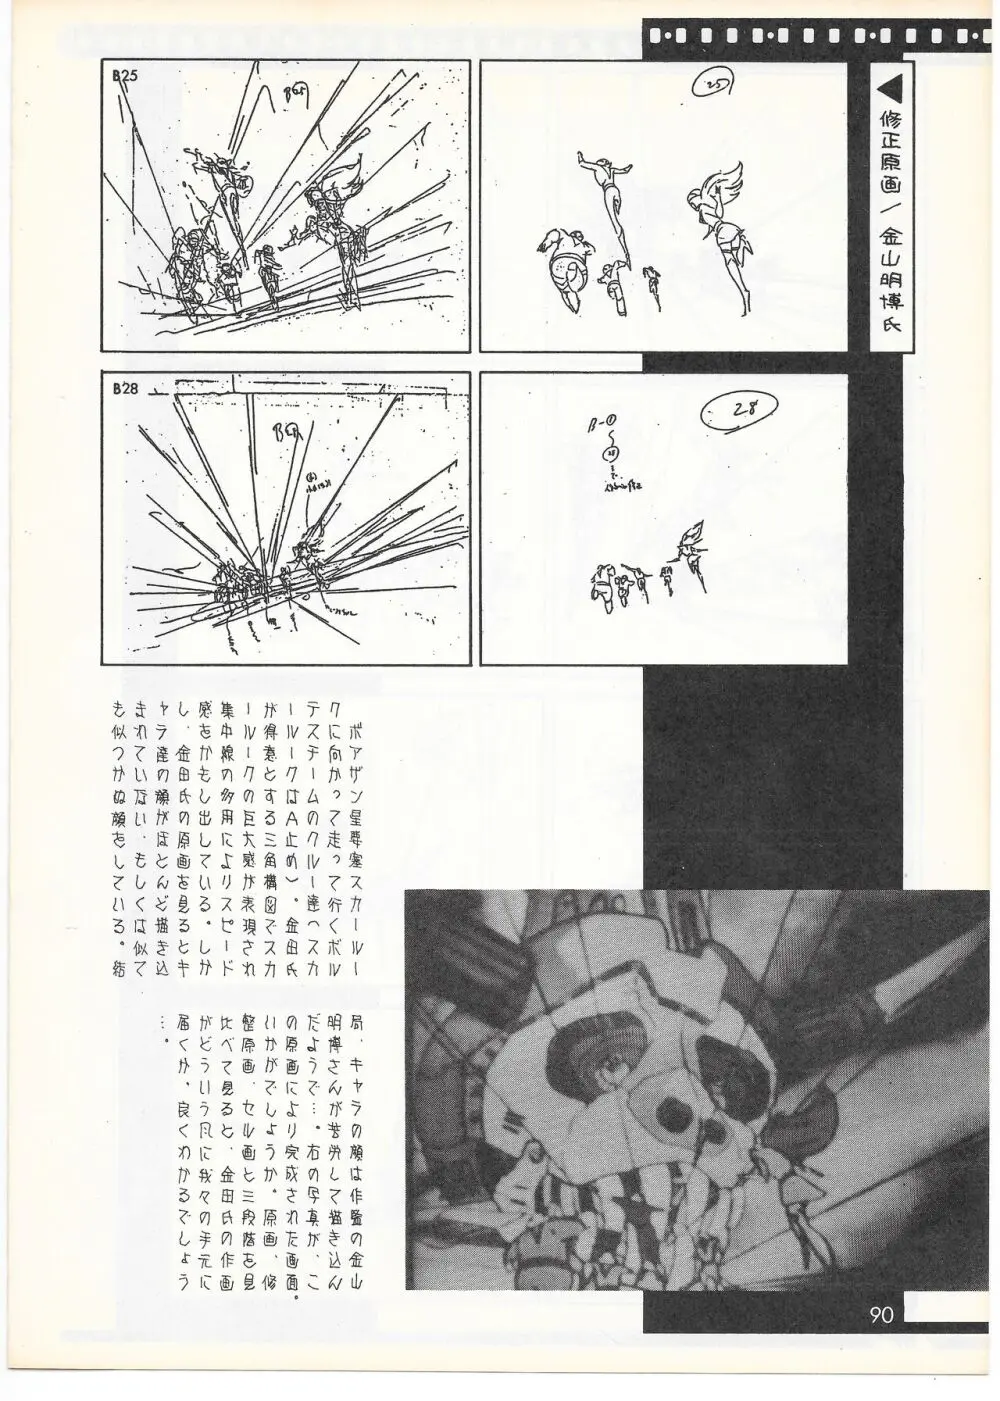 THE ANIMATOR 1 金田伊功特集号 - page87